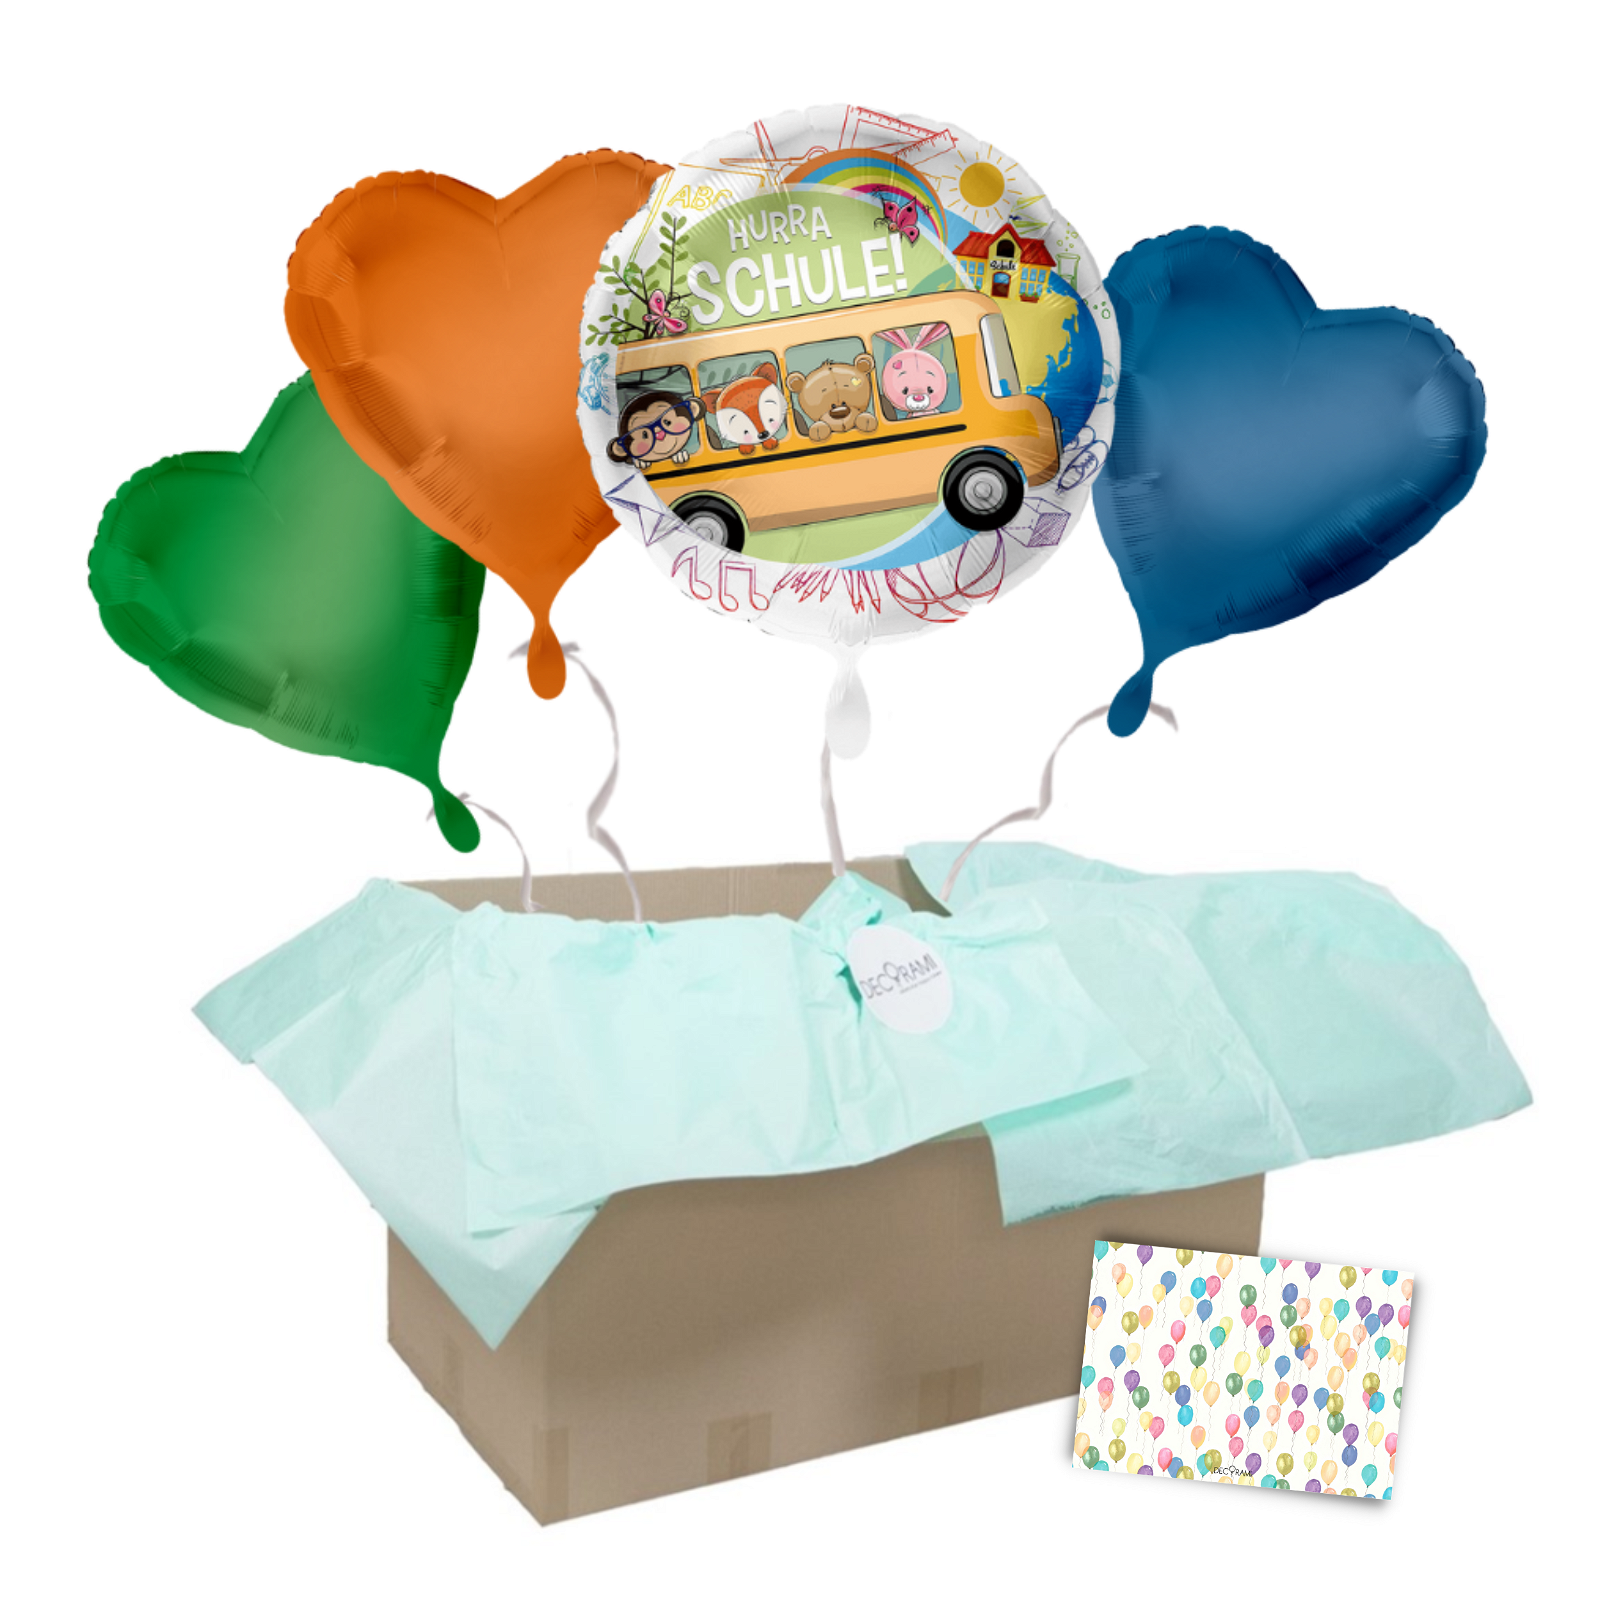 Heliumballon-Geschenk - Einschulung Hurra Schule